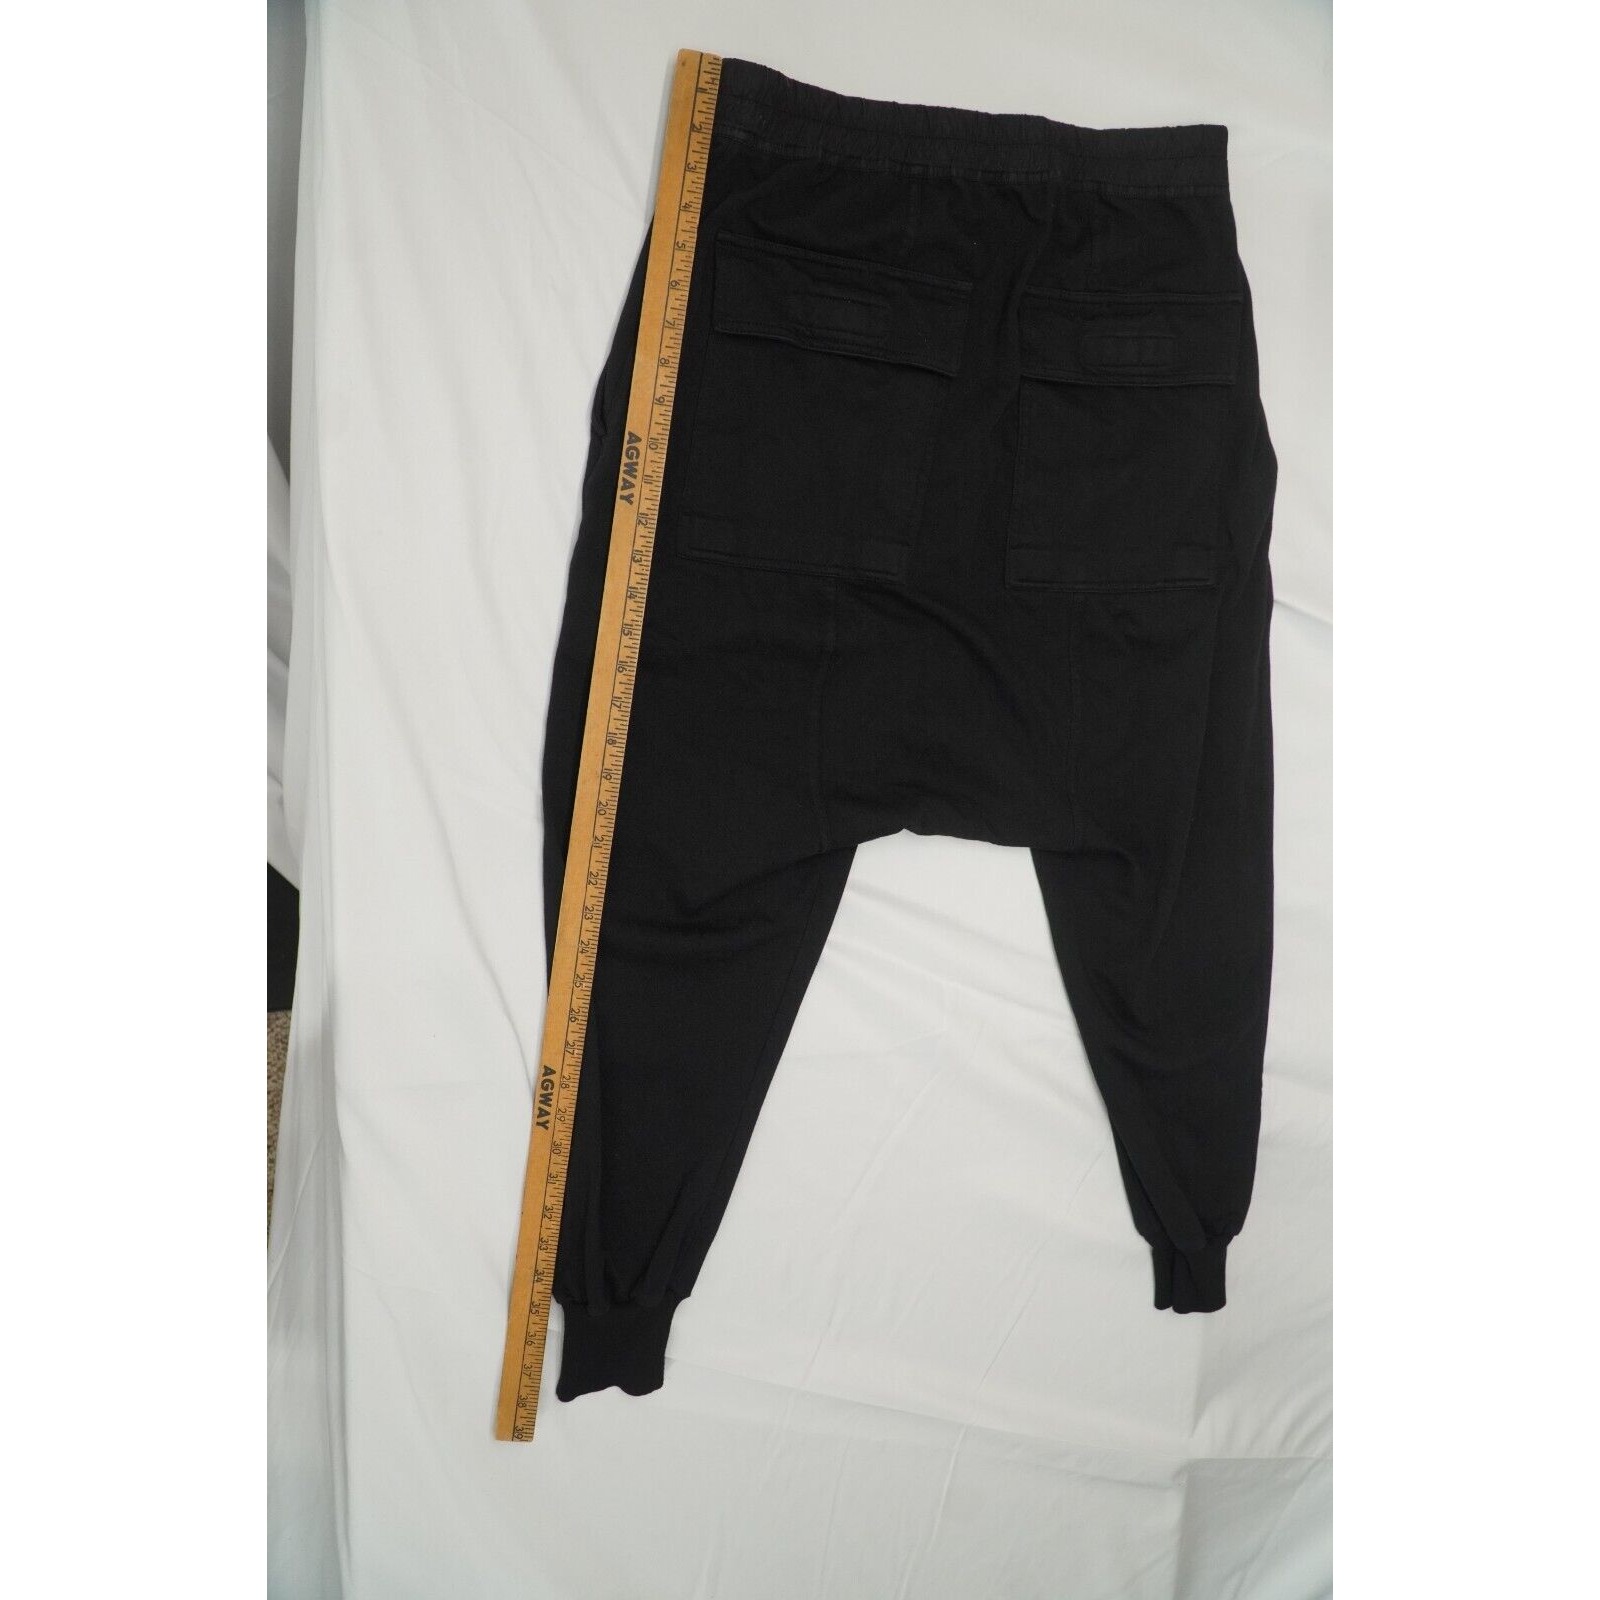 Rick Prisoner Black Pants Drop Crotch SS20 - M - 16